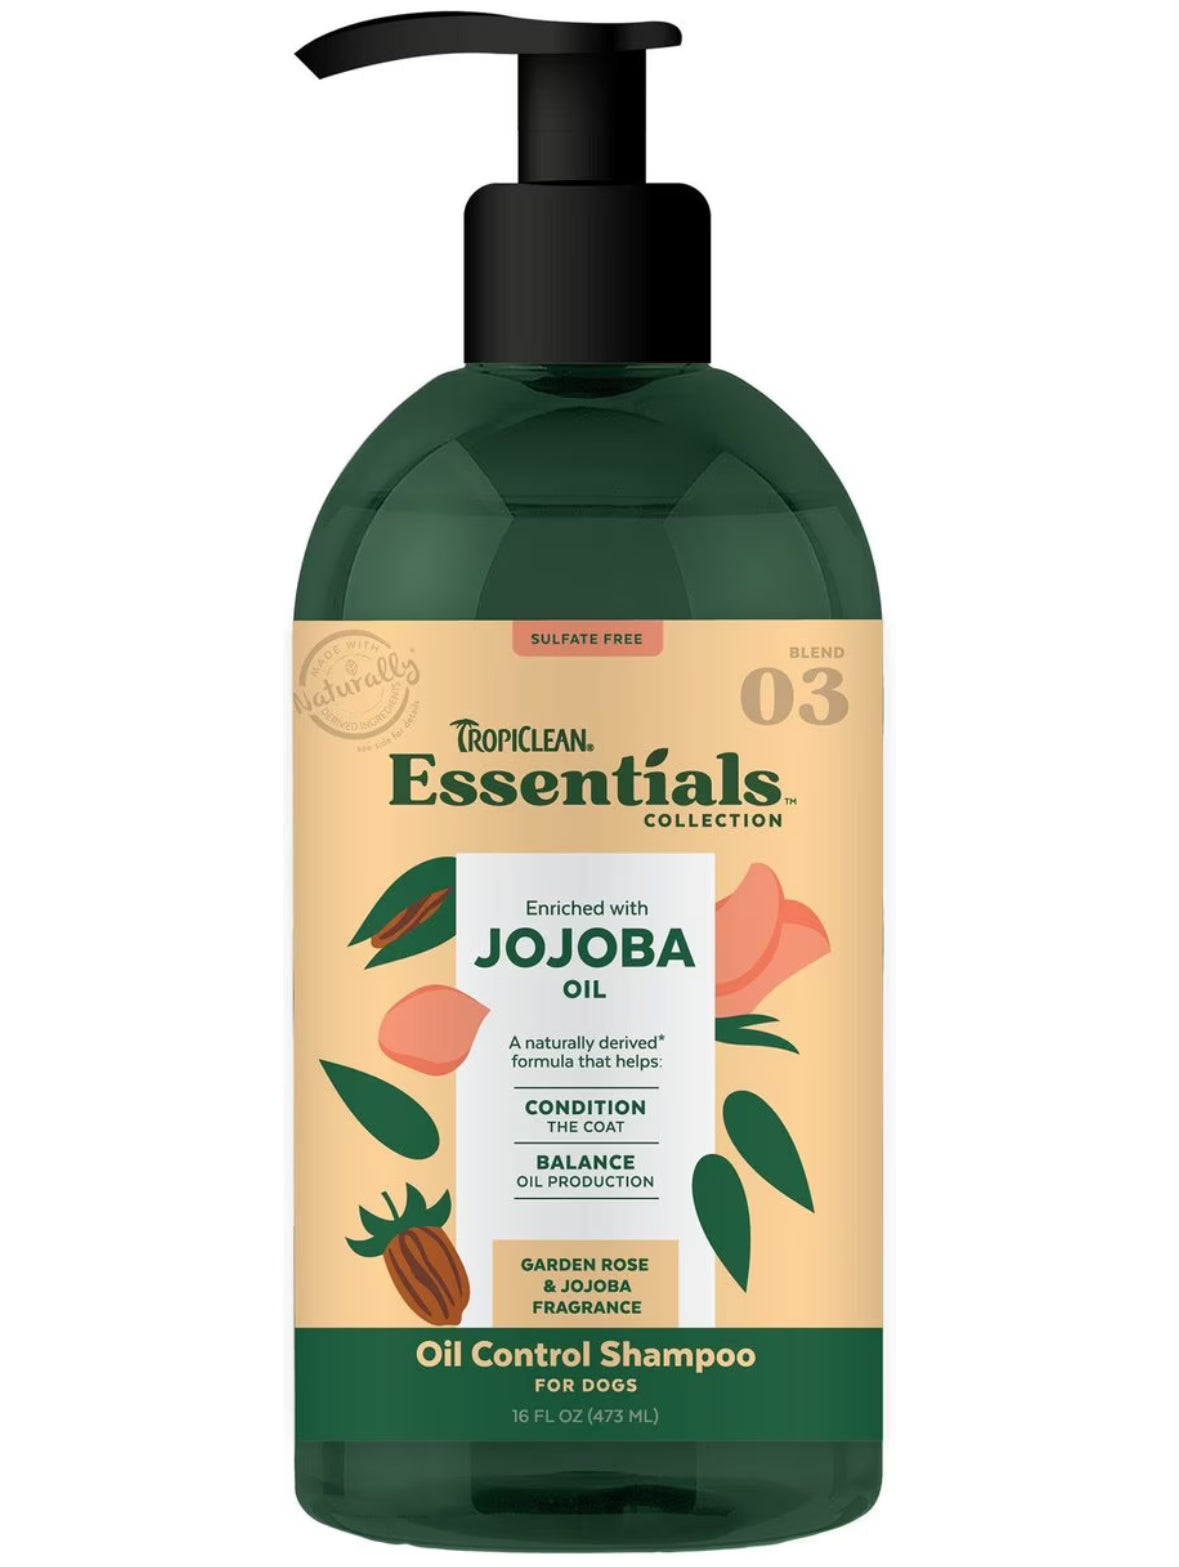 Tropiclean essentials oil control shampoo